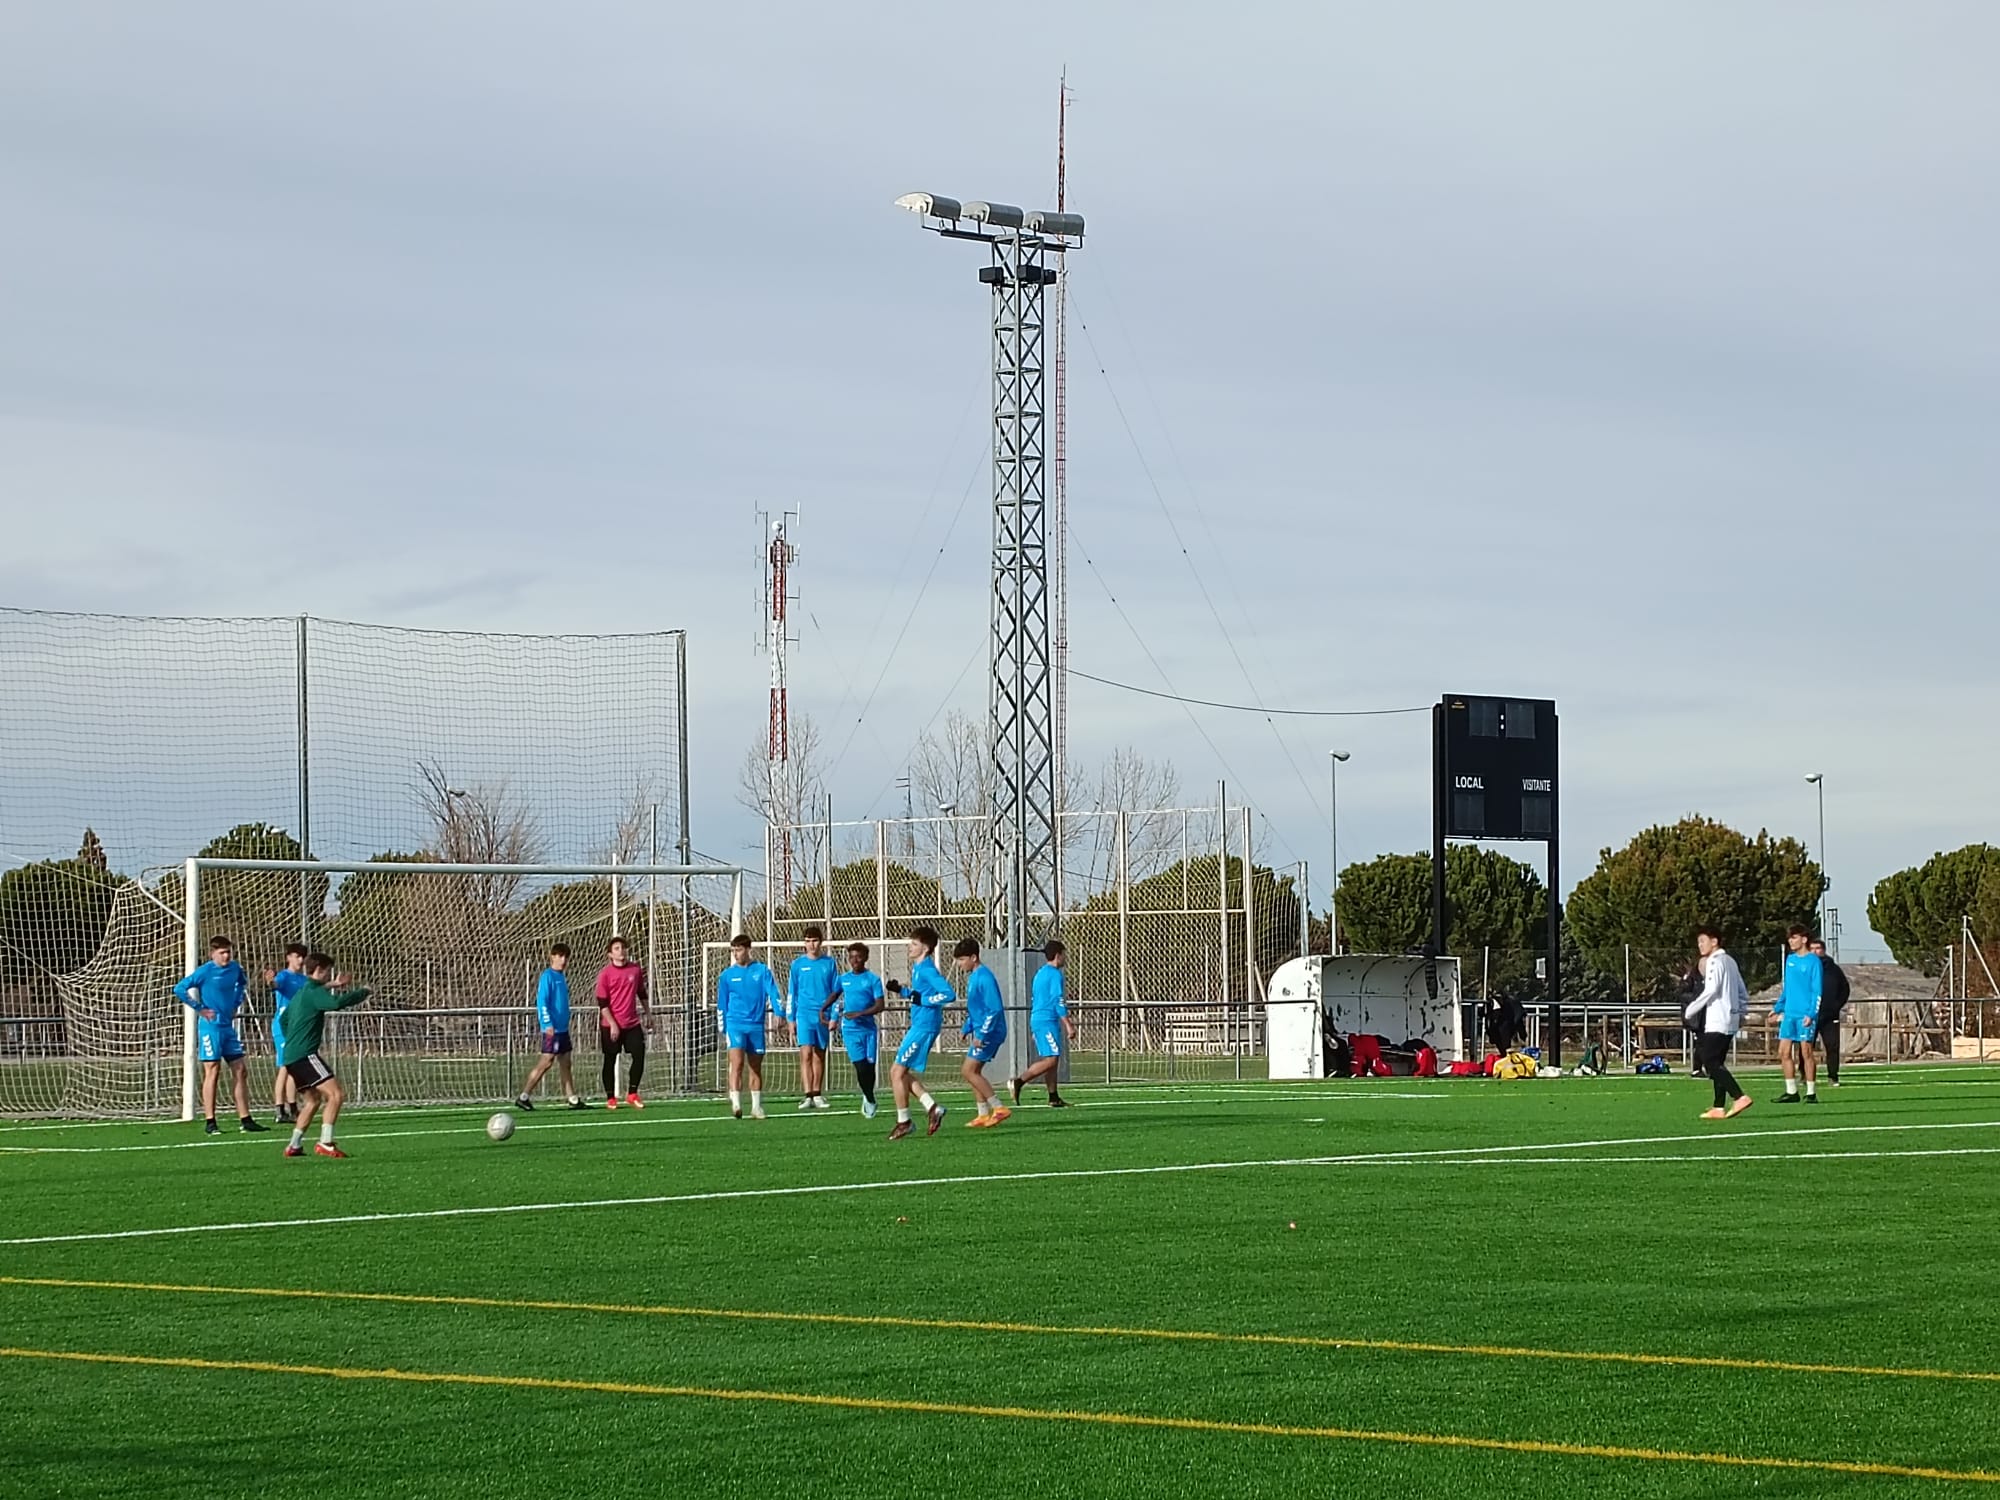 Proctor en Segovia soccer afternoon activity